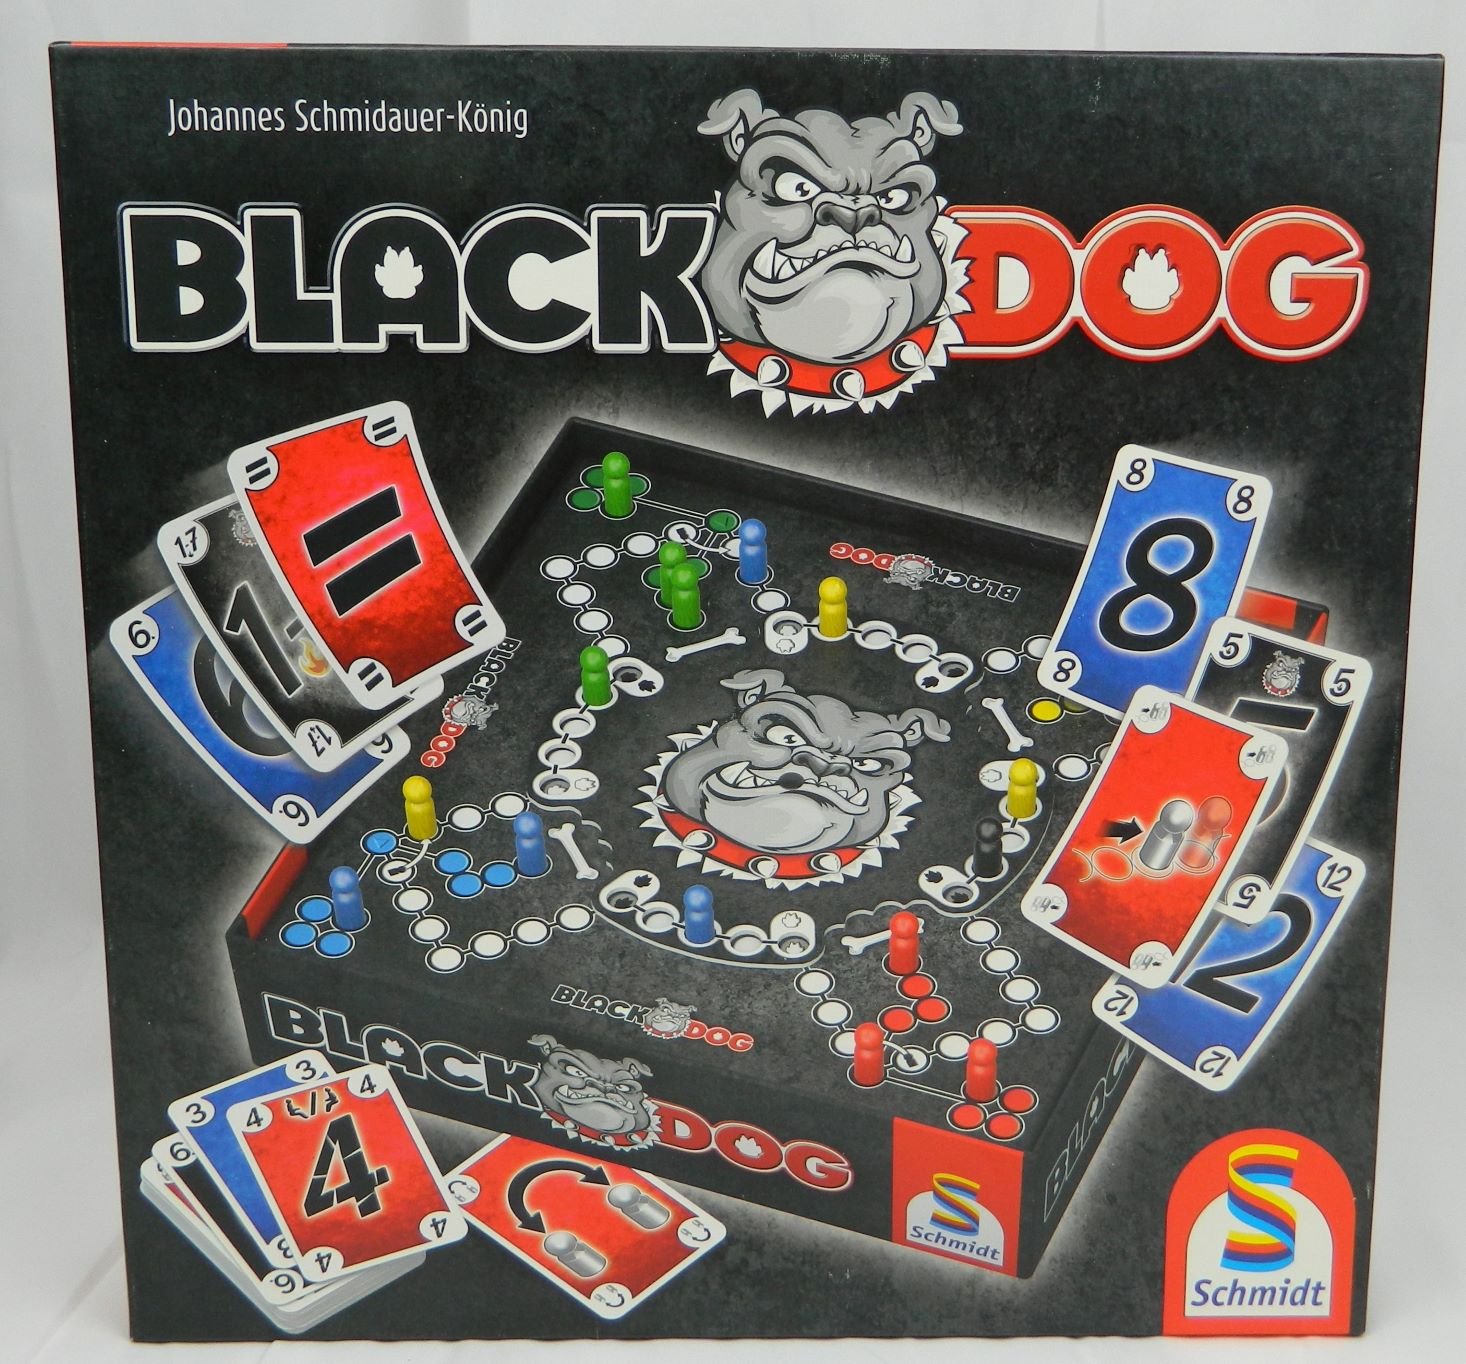 Box for Black Dog